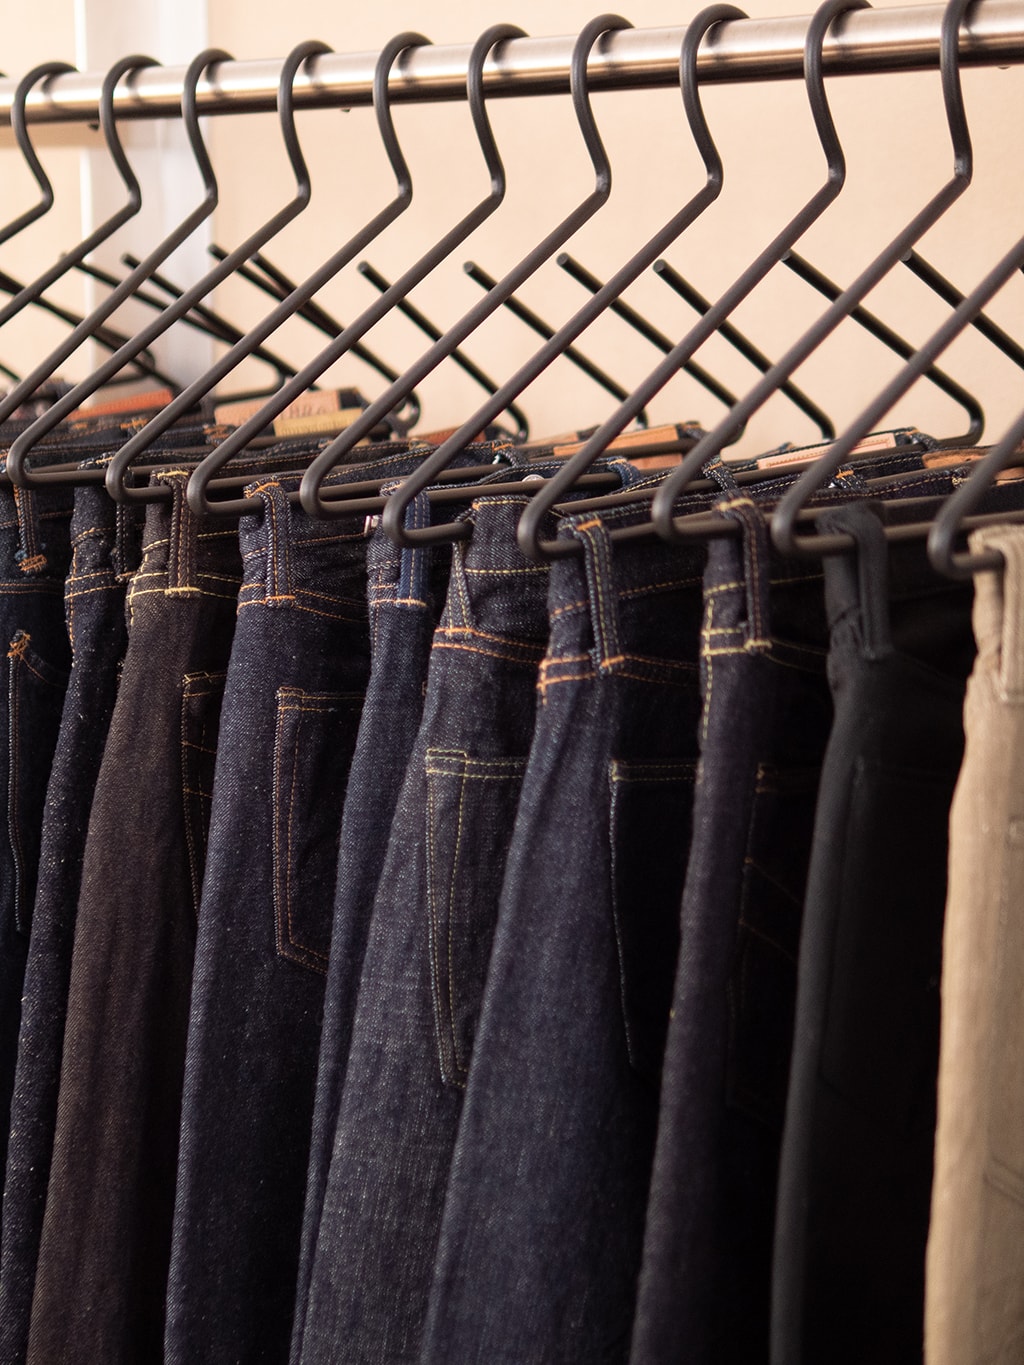 redcast heritage iron jeans hanger showroom